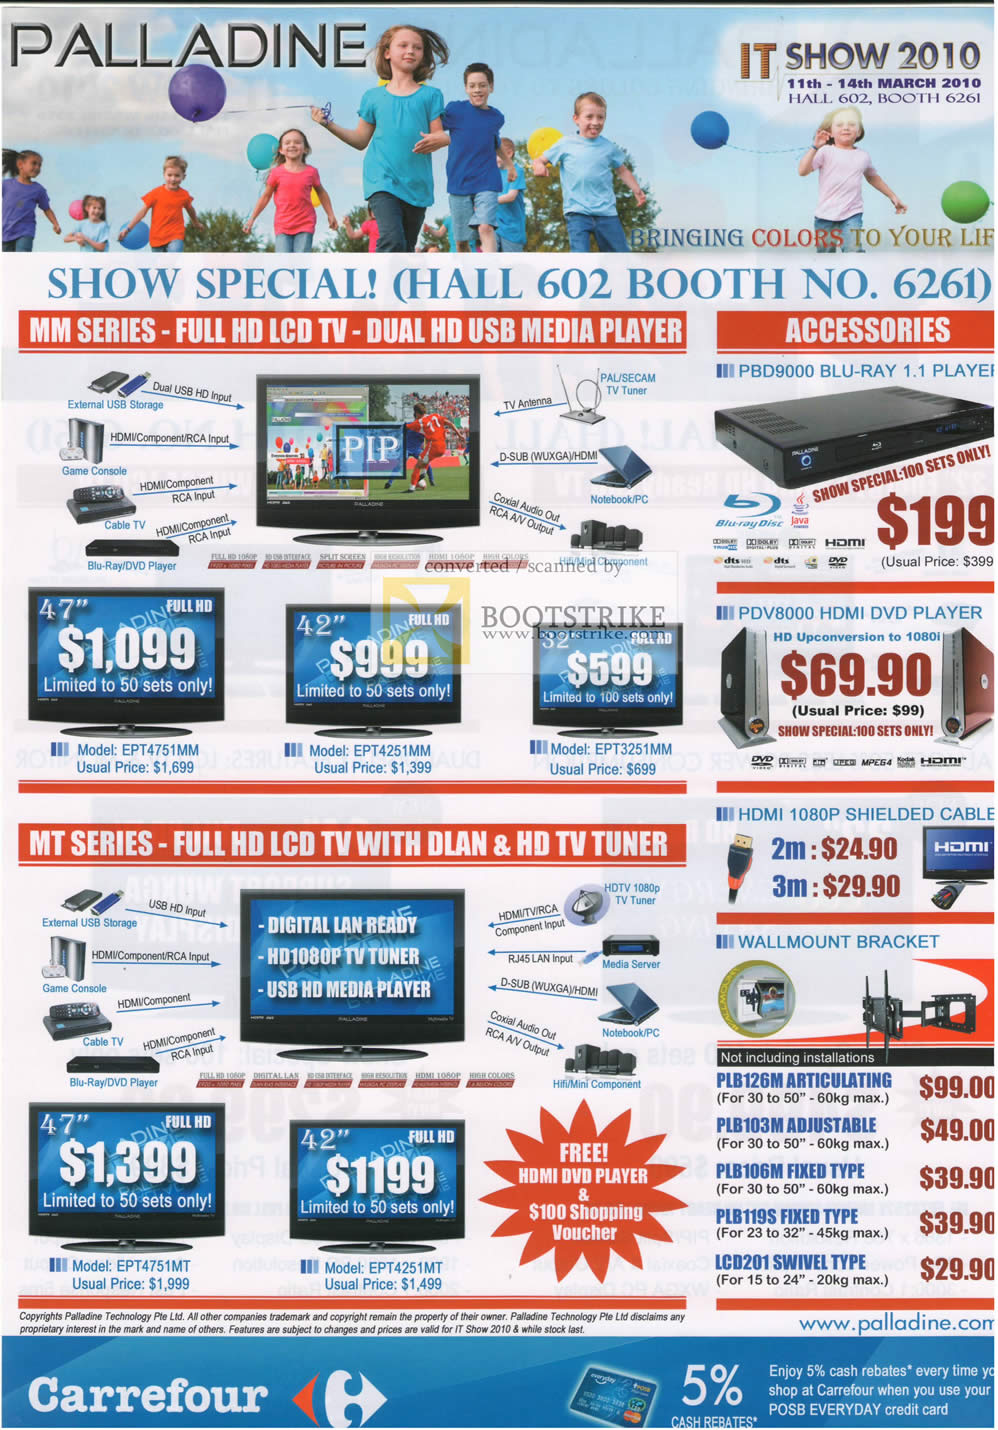 IT Show 2010 price list image brochure of Carrefour Palladine LCD TV Full HD Blu Ray PBD9000 PDV8000